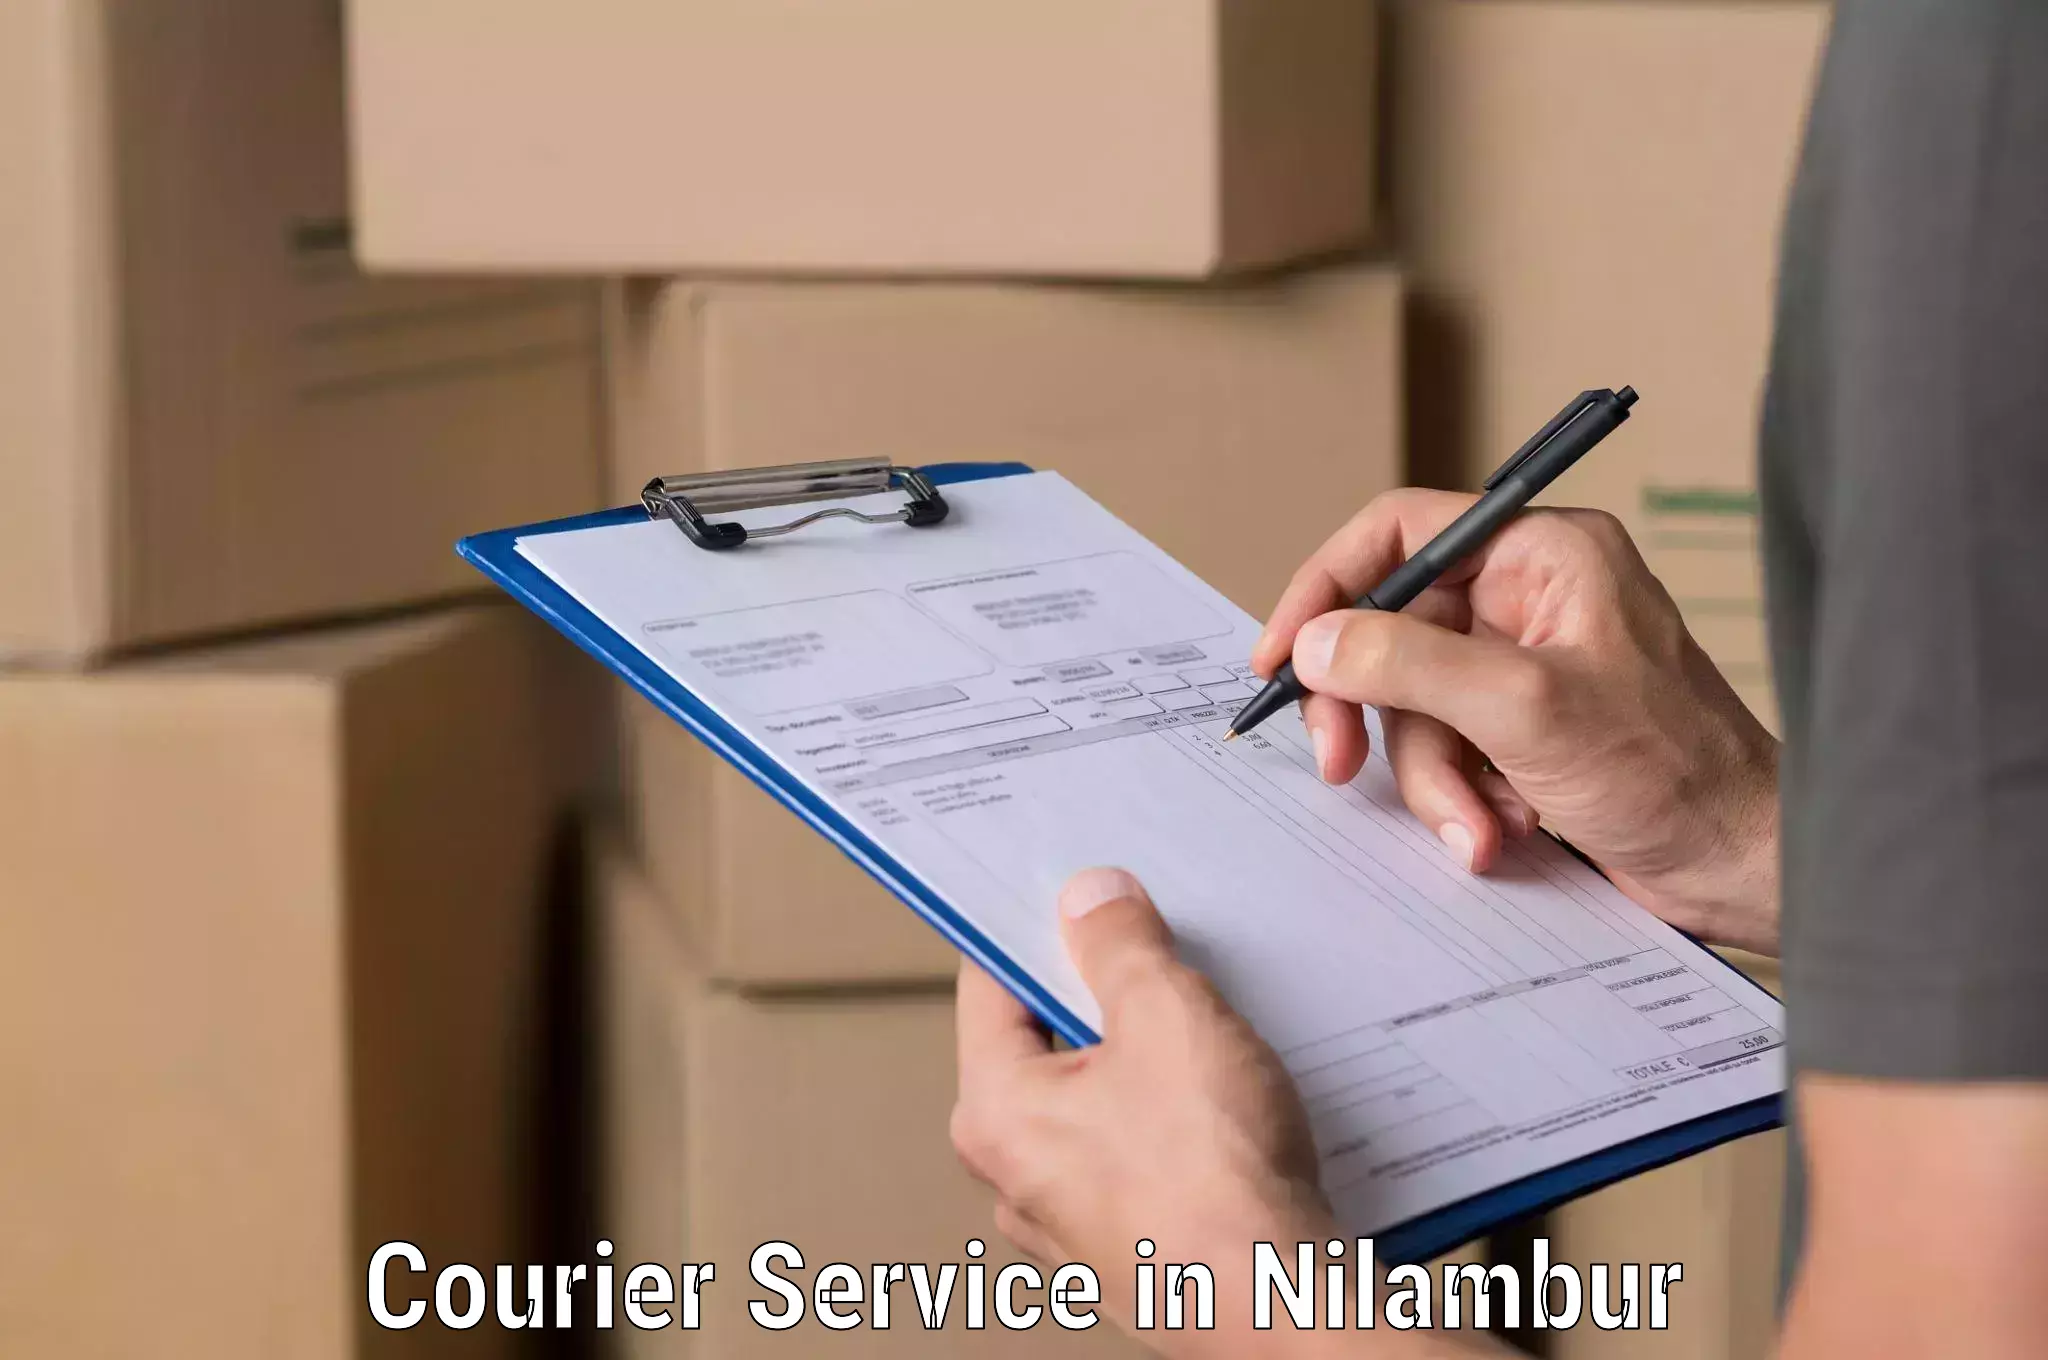 Multi-service courier options in Nilambur